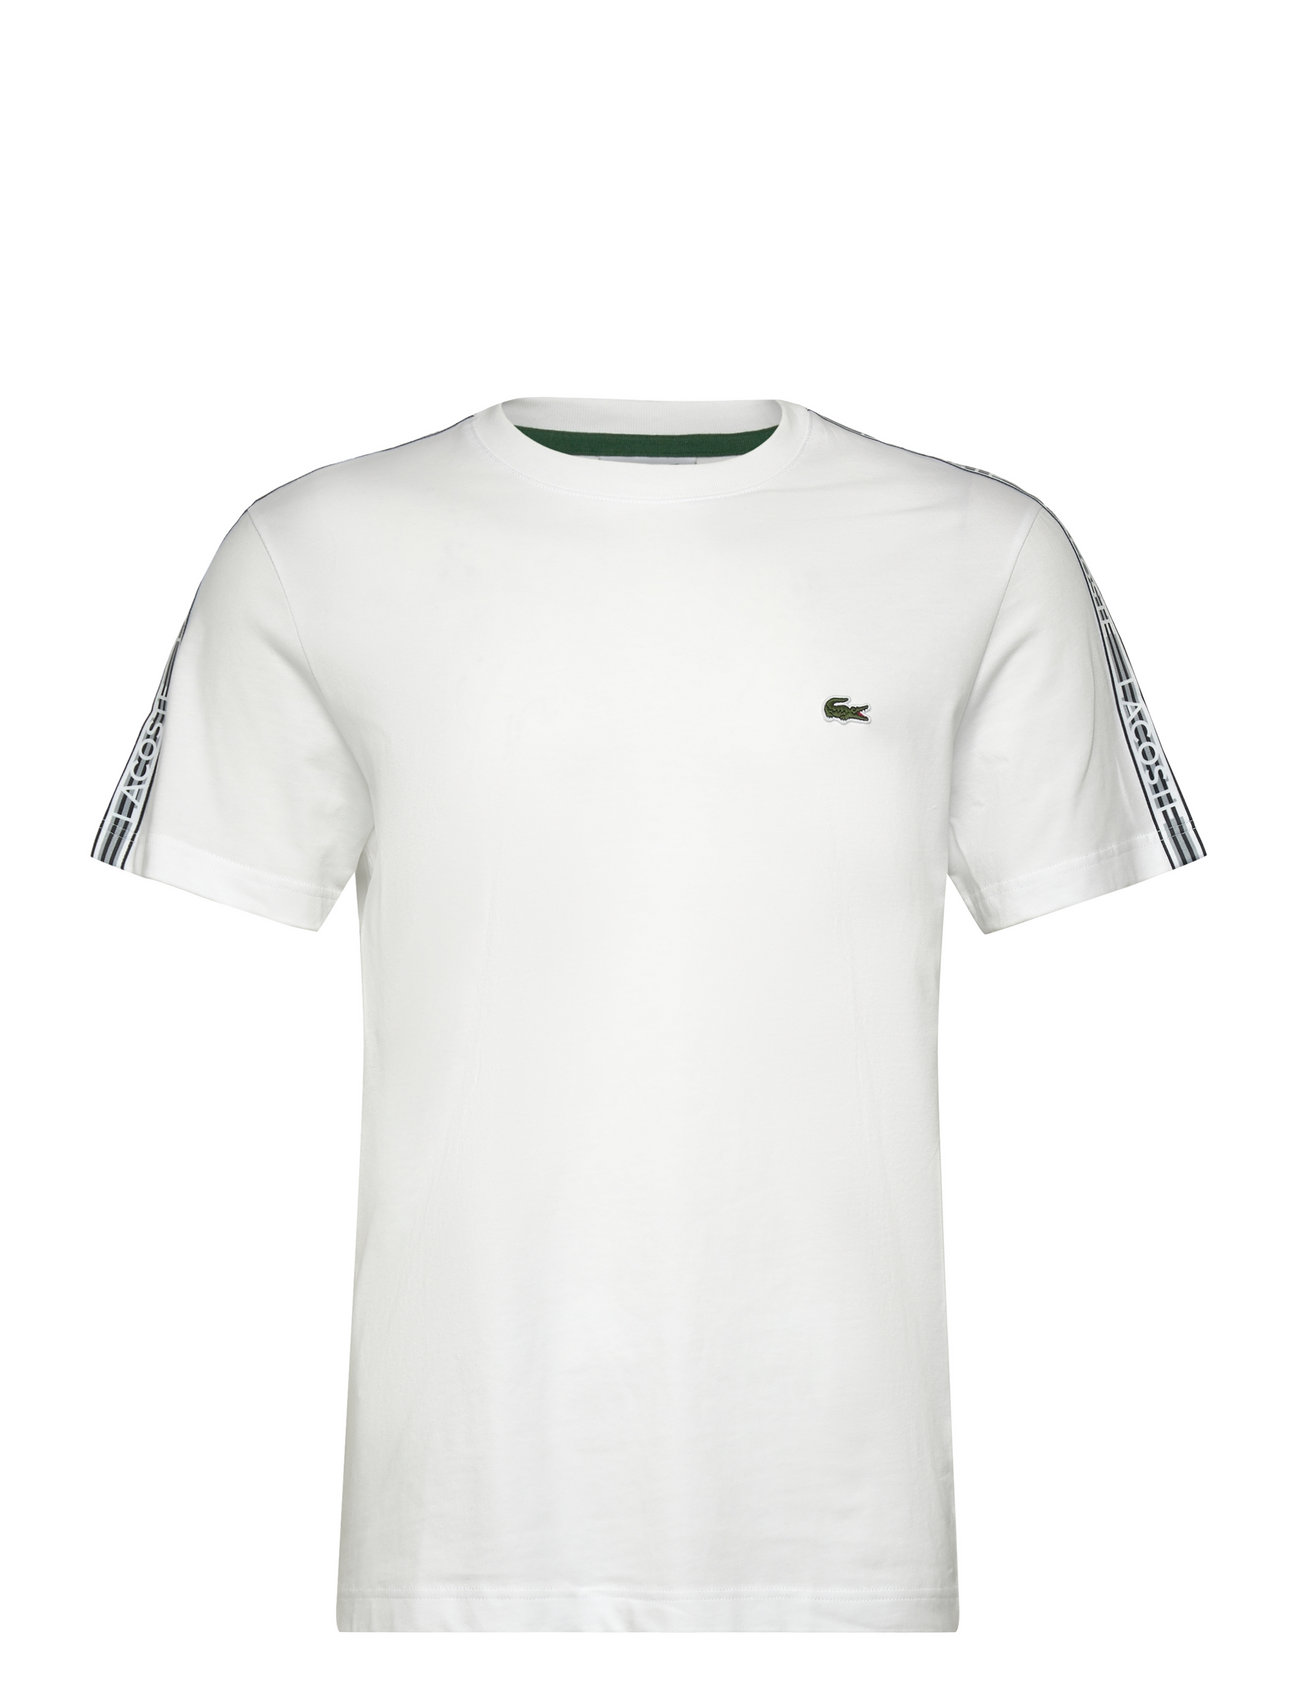 Gnaven shabby valse Lacoste Tee-shirt&turtle Neck - T-Shirts - Boozt.com